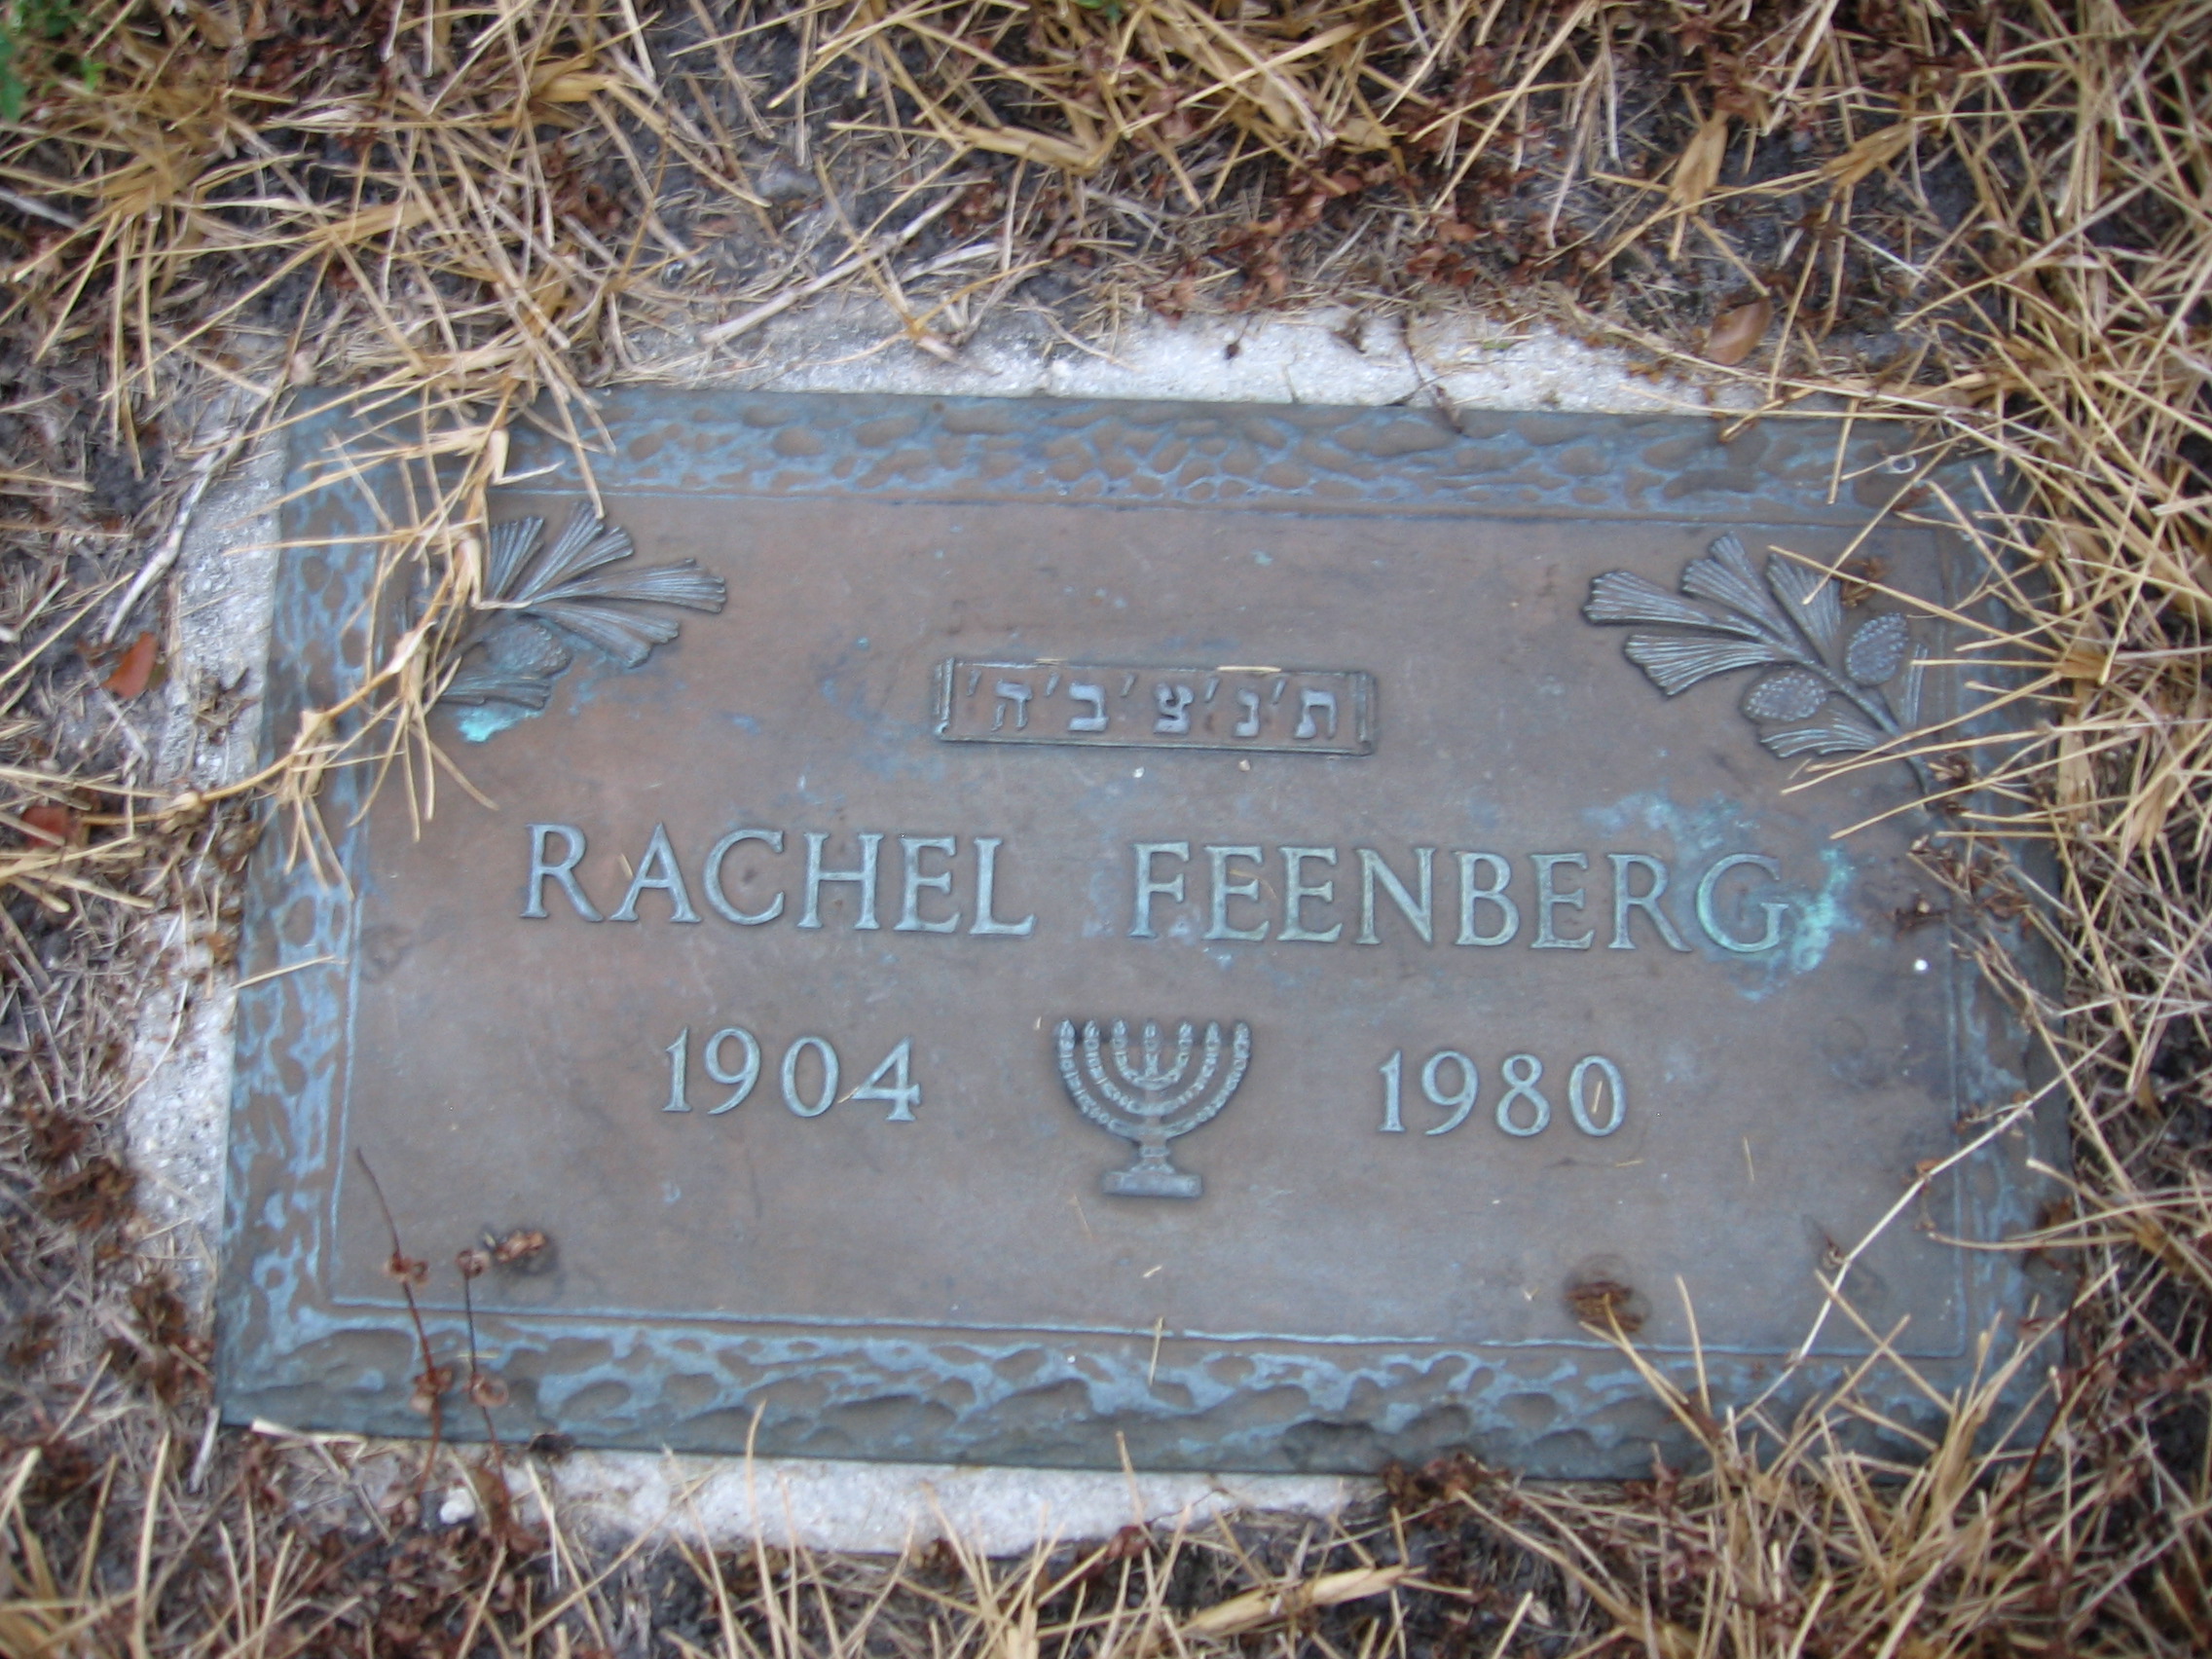 Rachel Feenberg